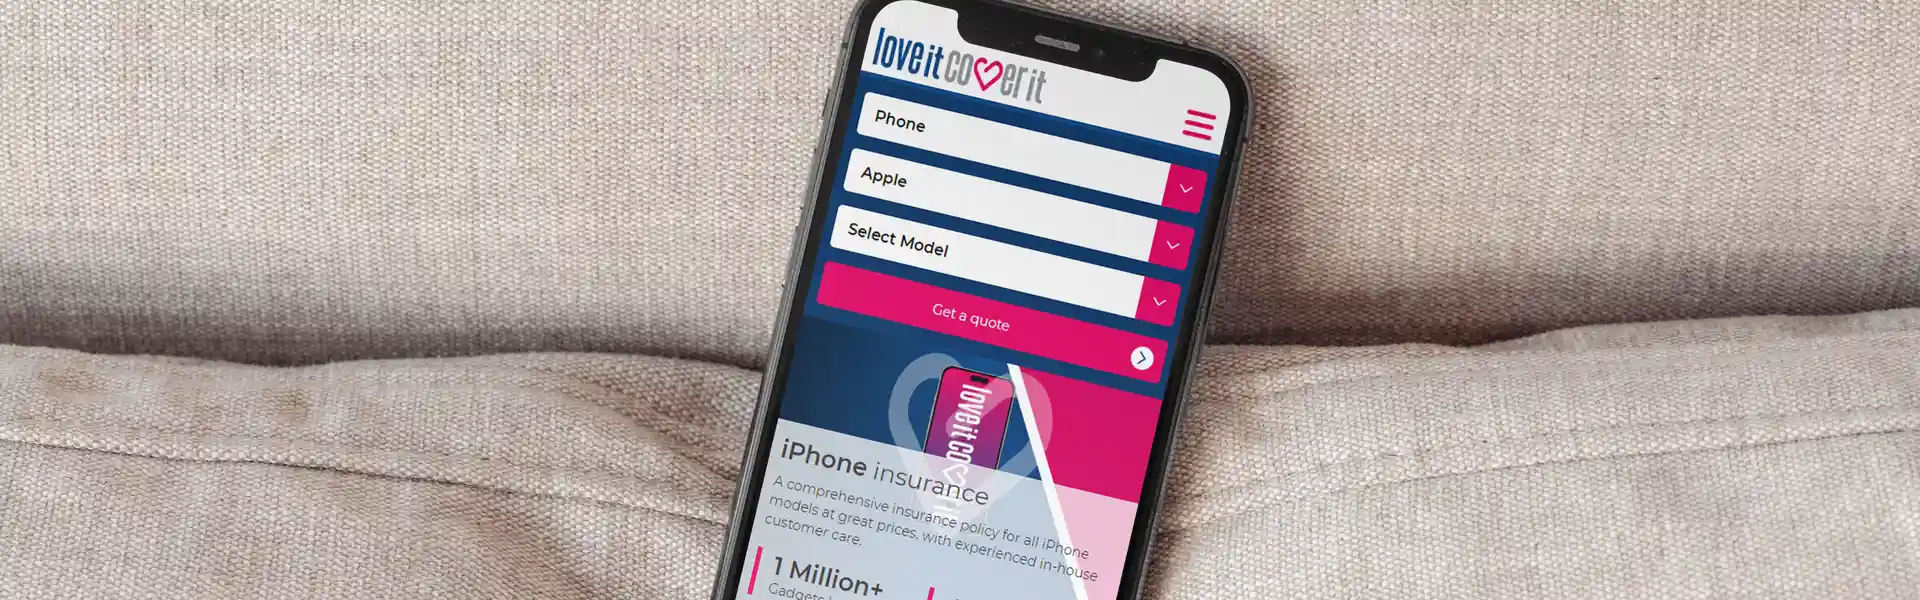 iphone-insurance-uk